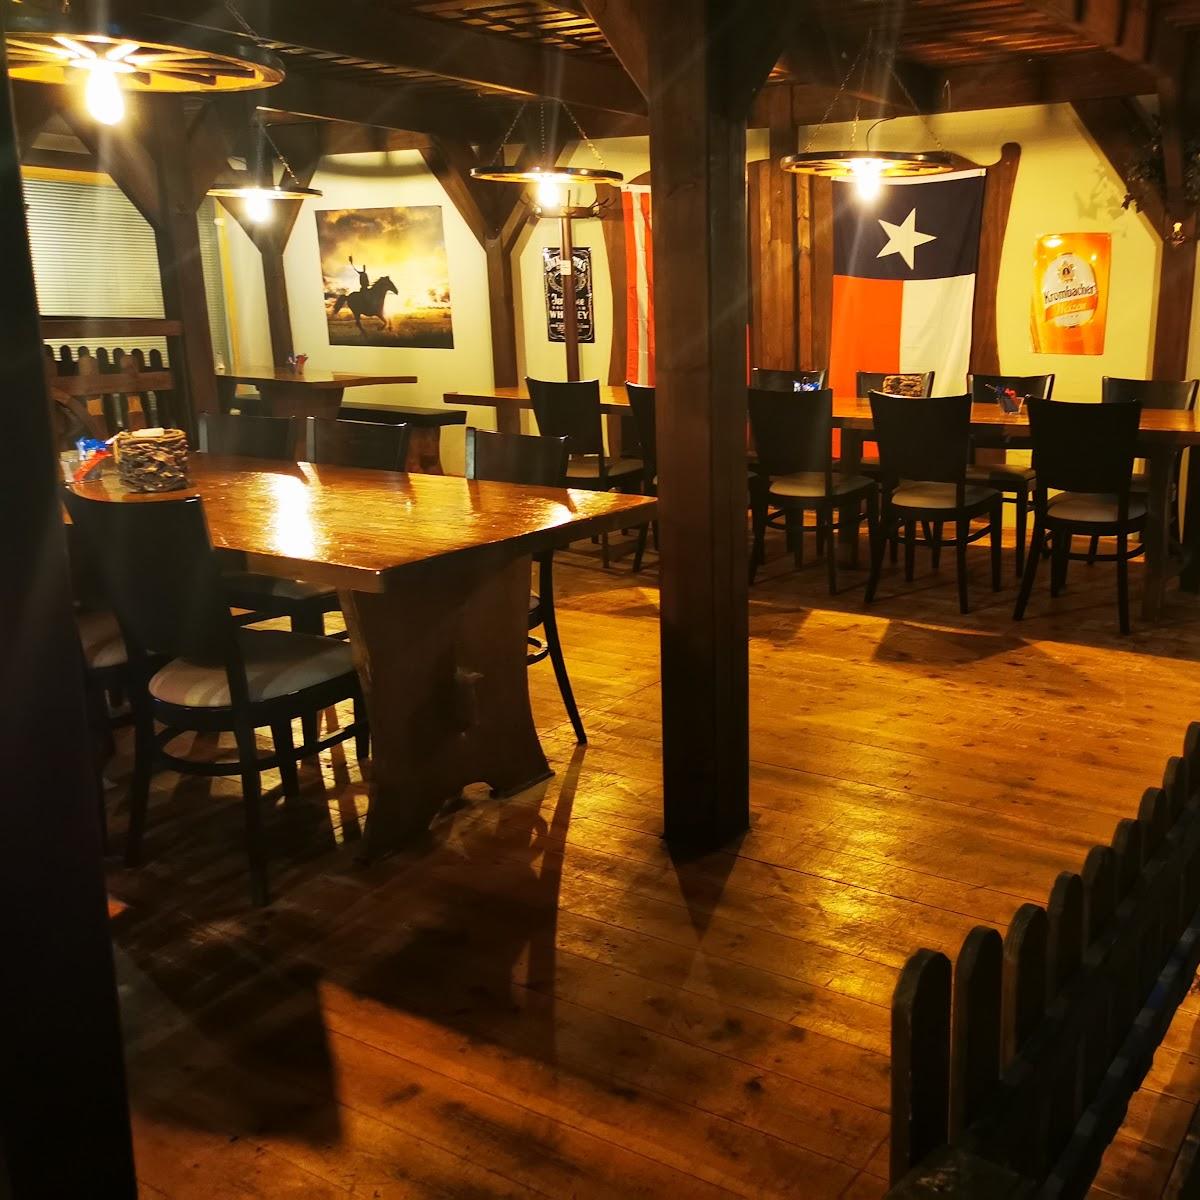 Restaurant "Texas Cowboys" in Pinneberg